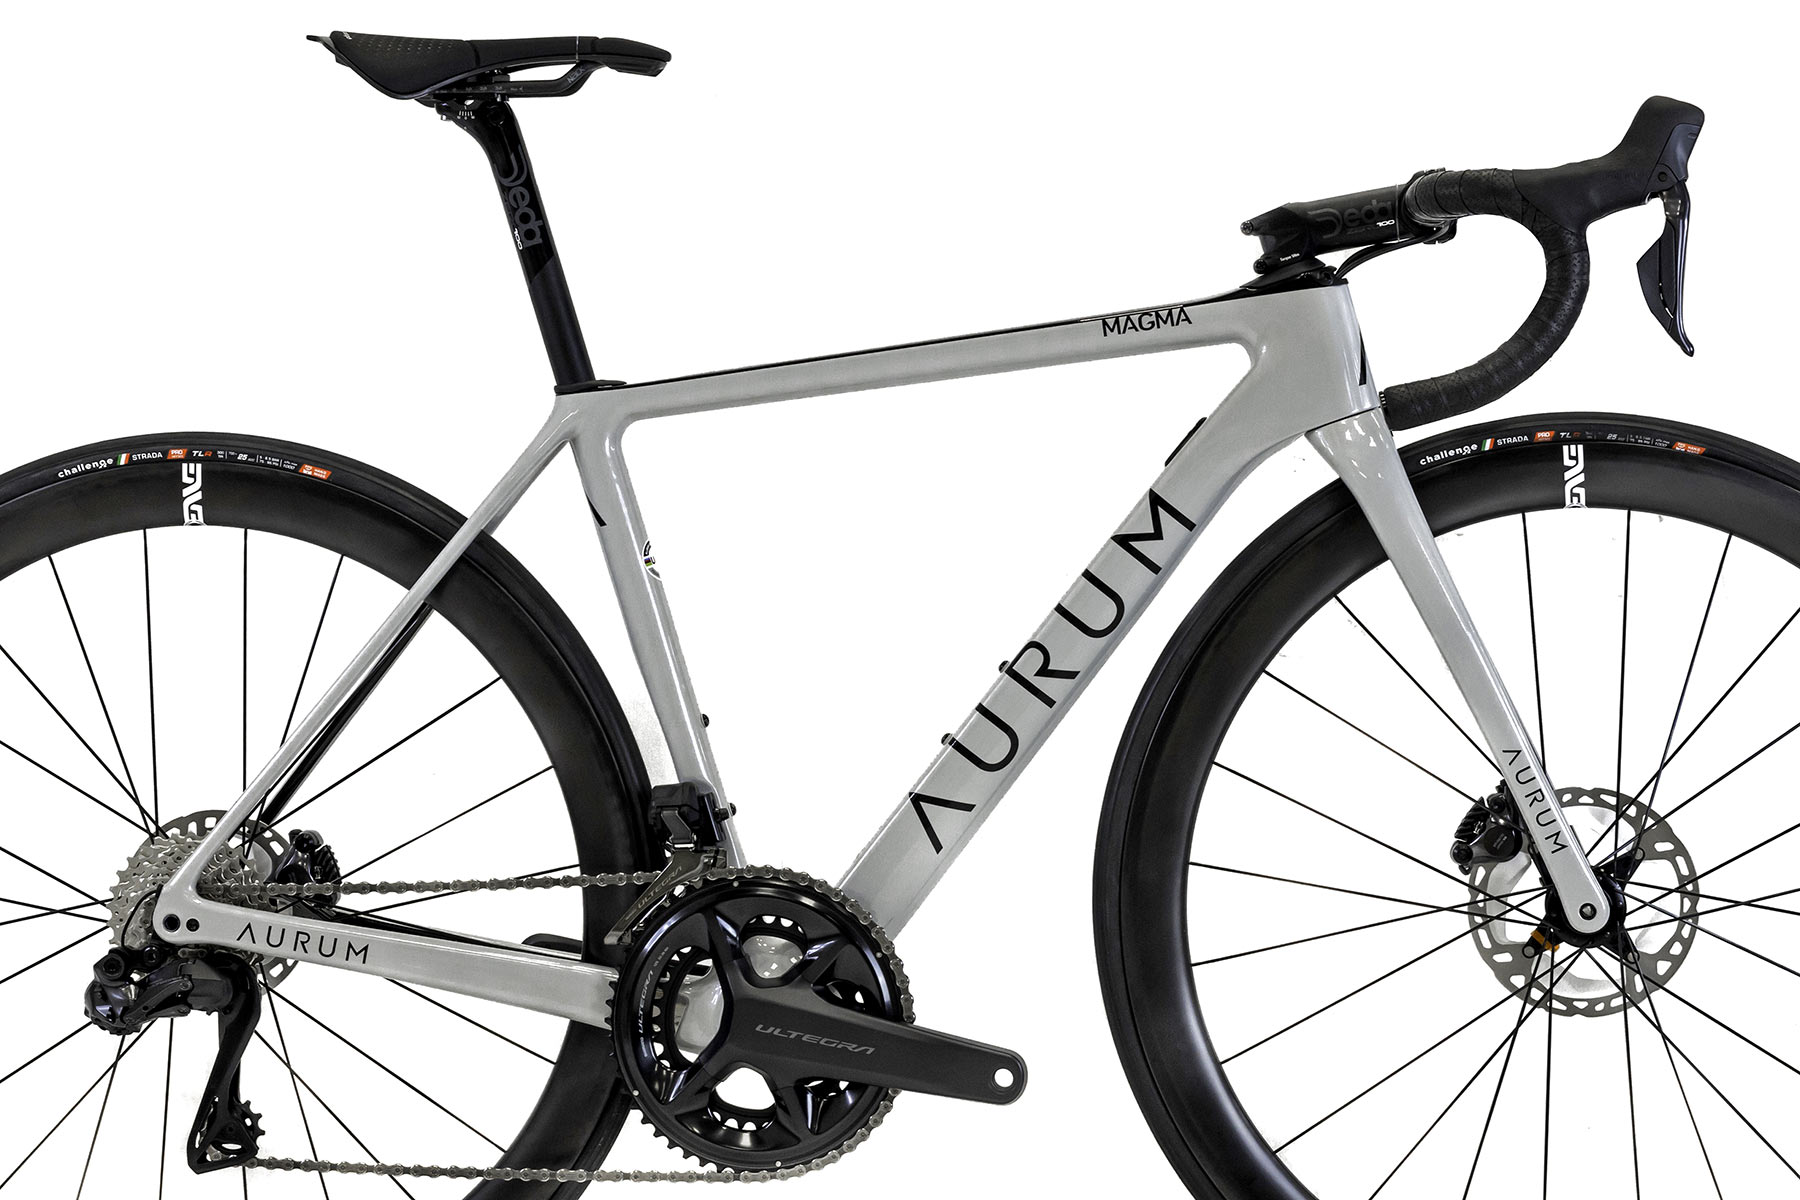 Aurum Magma Essentia more affordable all-rounder carbon road bike, grey frame detail